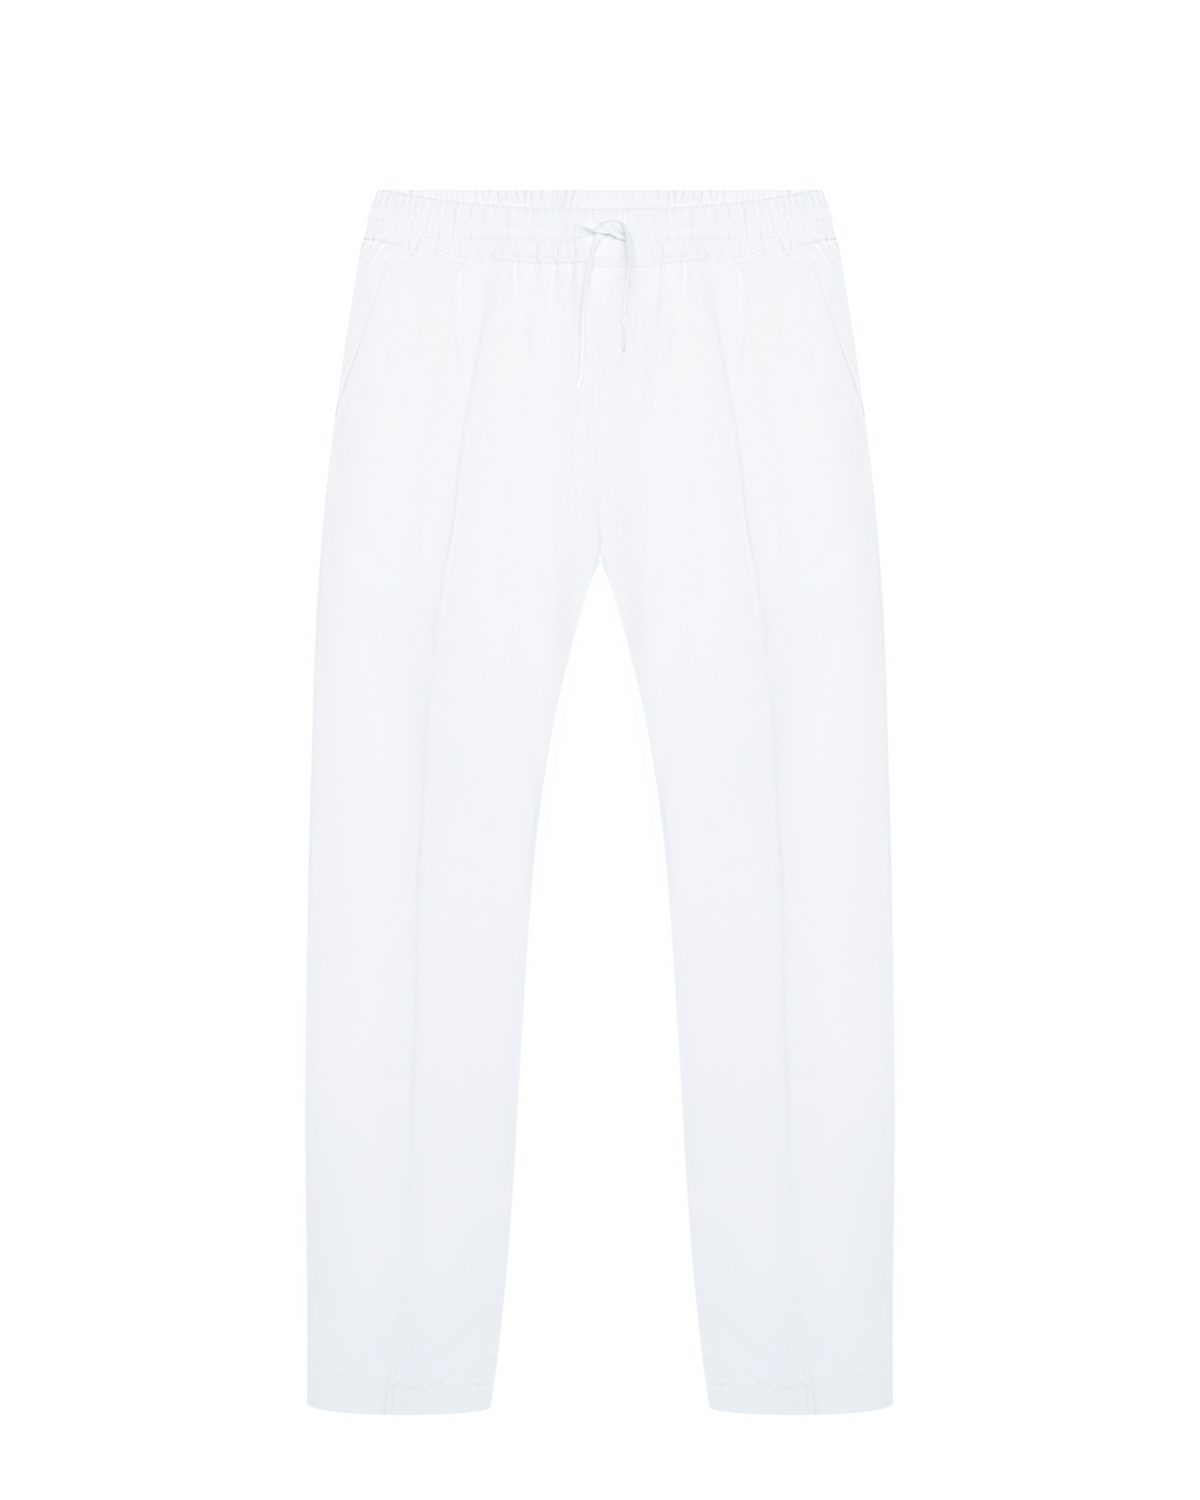 Брюки белые со стрелками, на шнурке Antony Morato, размер 140, цвет нет цвета - фото 1